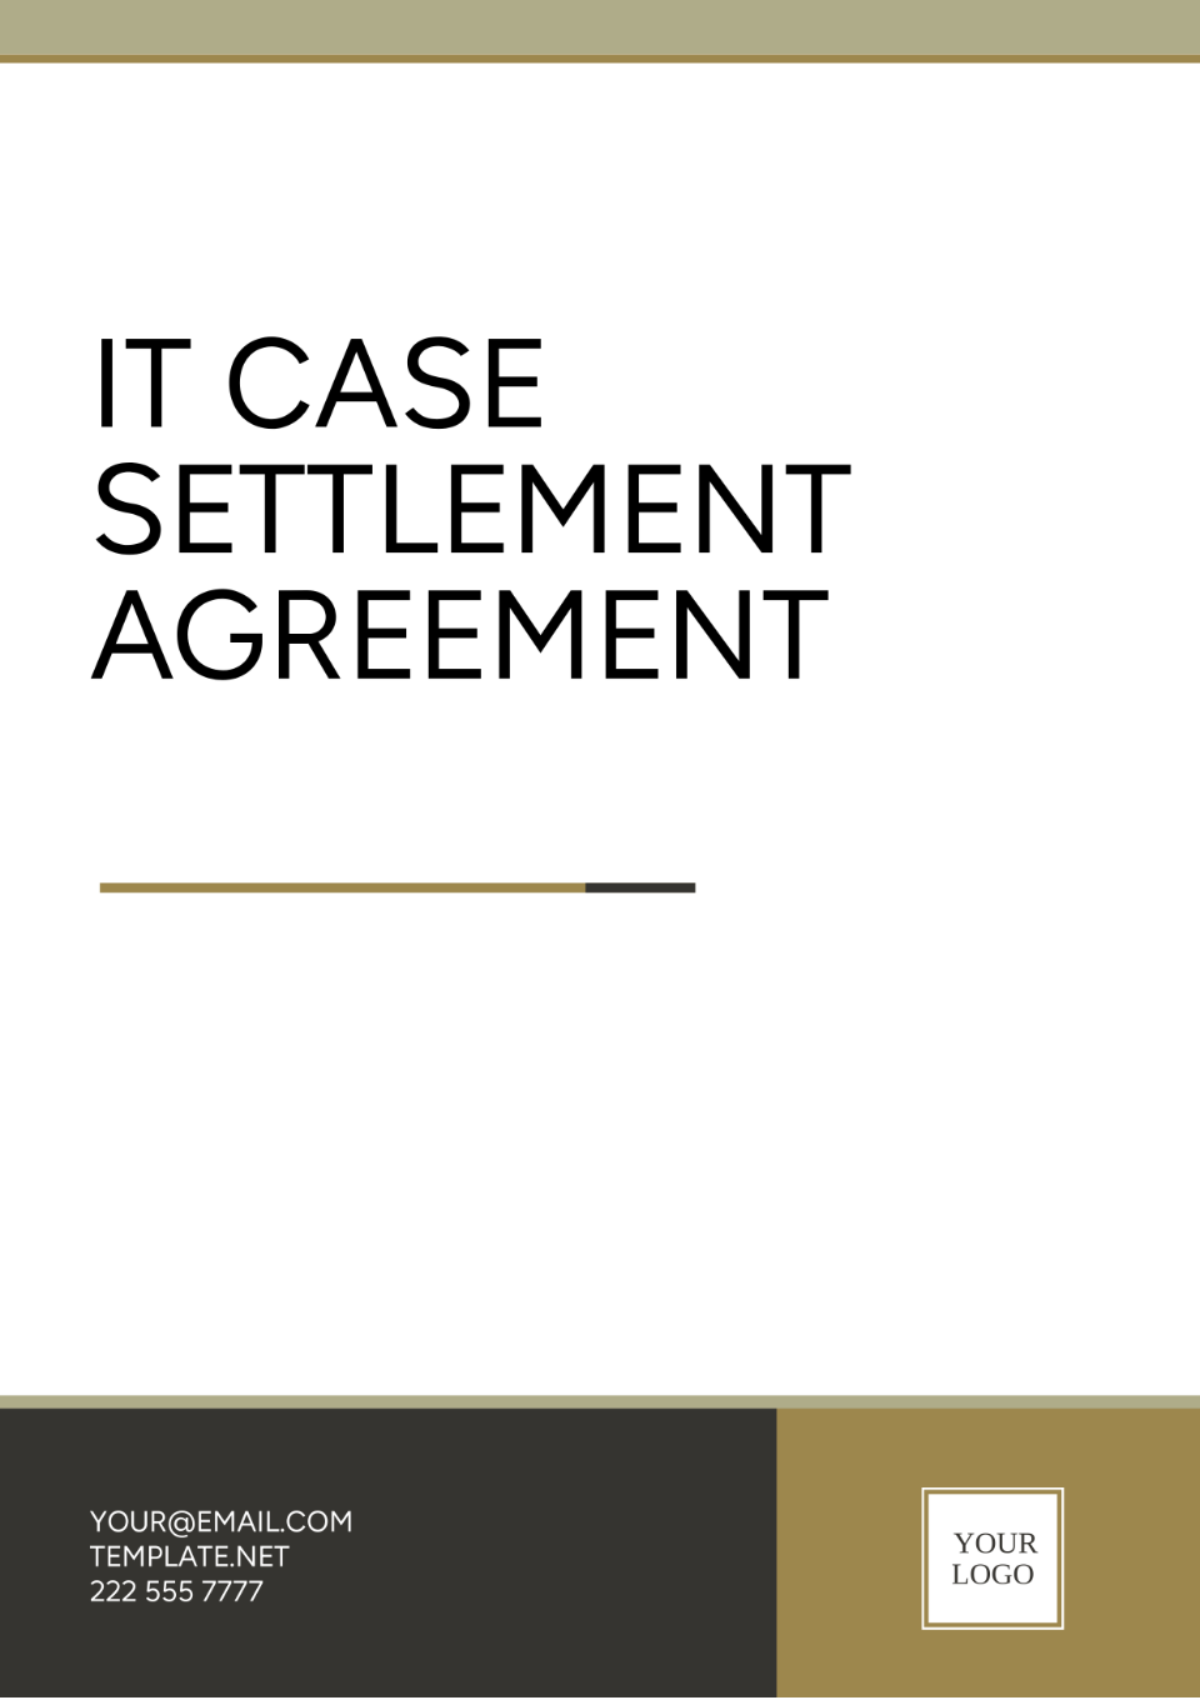 Free IT Case Settlement Agreement Template